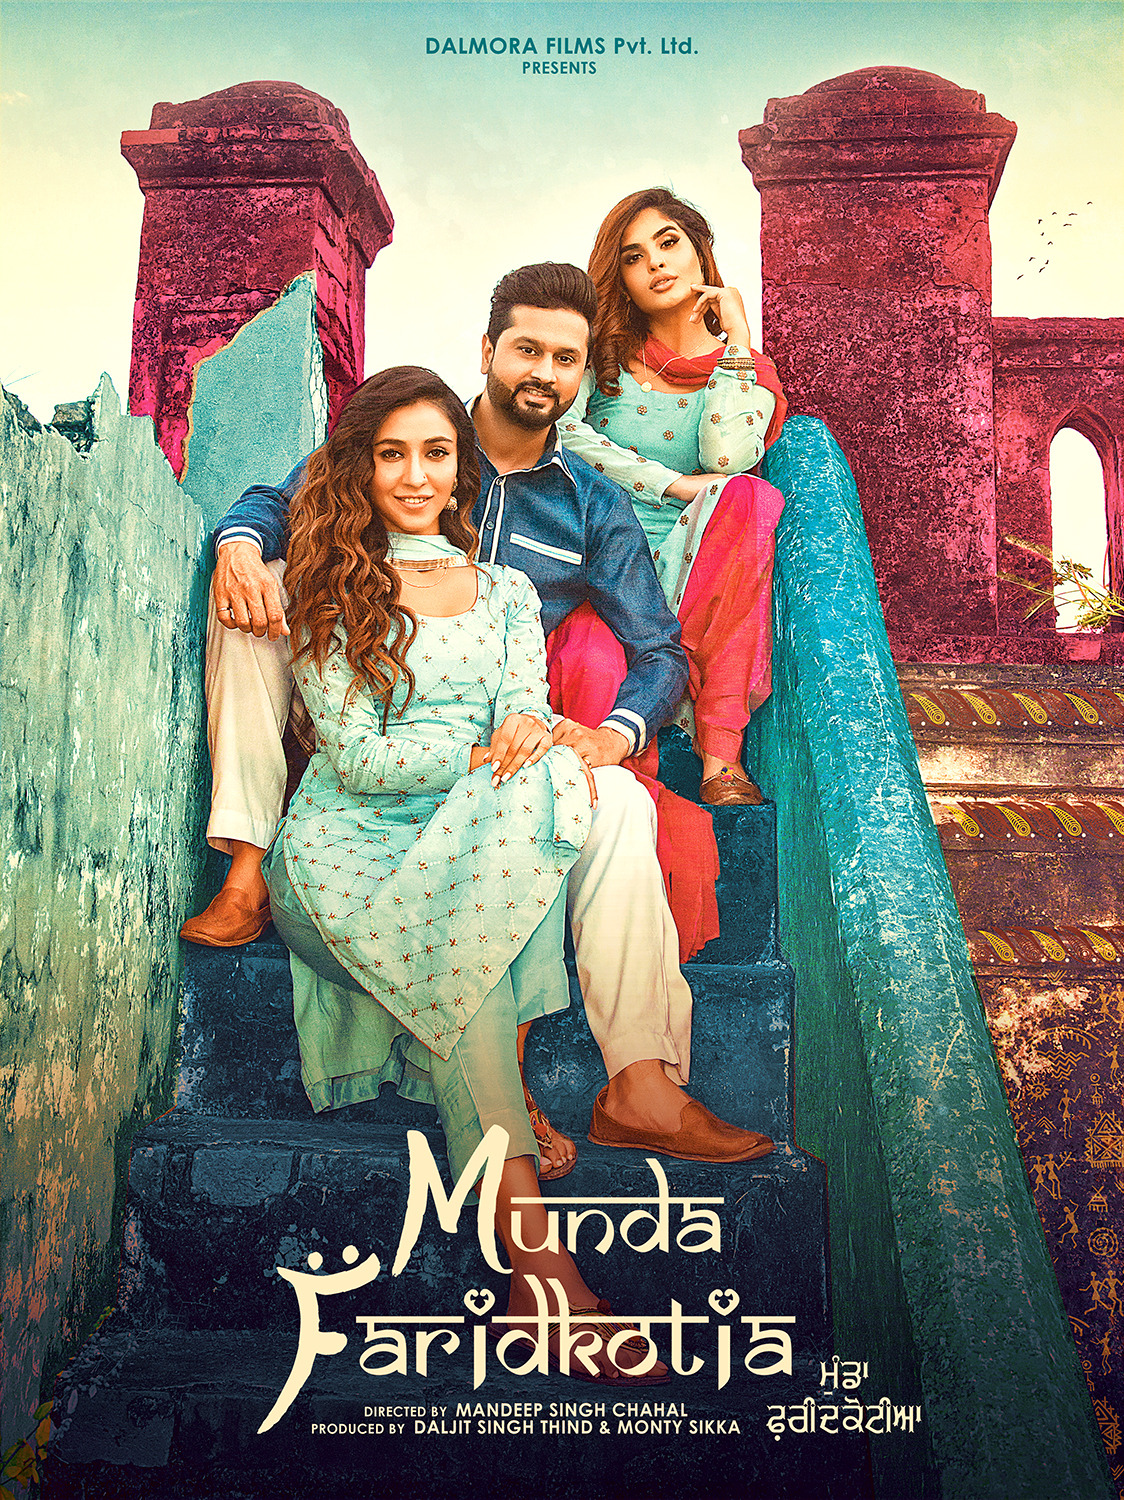 Extra Large Movie Poster Image for Munda Faridkotia (#1 of 2)